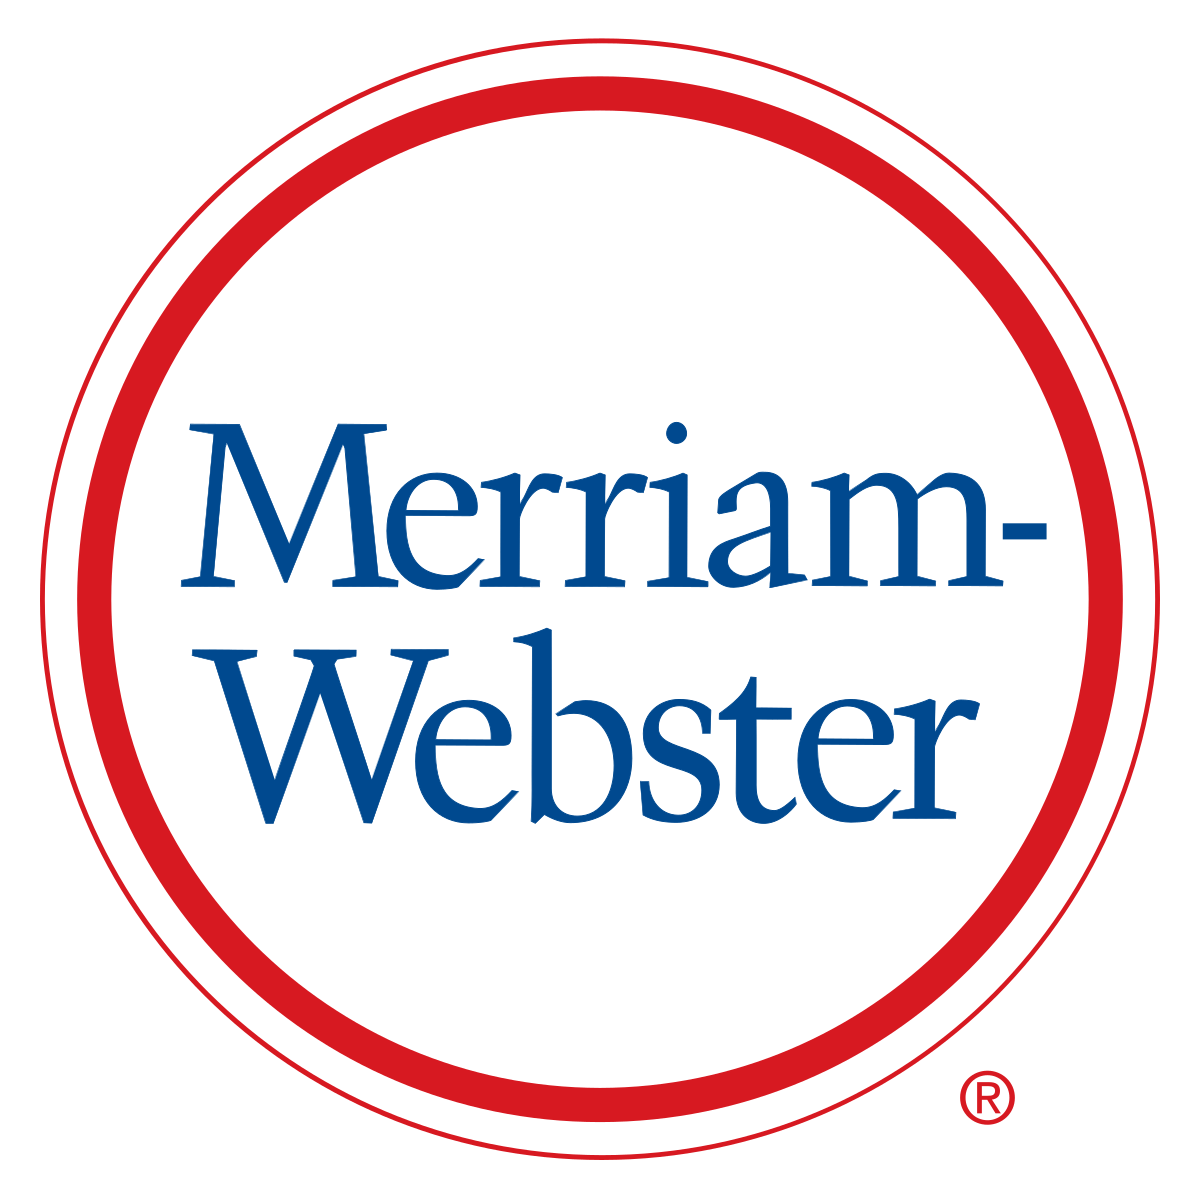 Google Dictionary Logo - Merriam-Webster